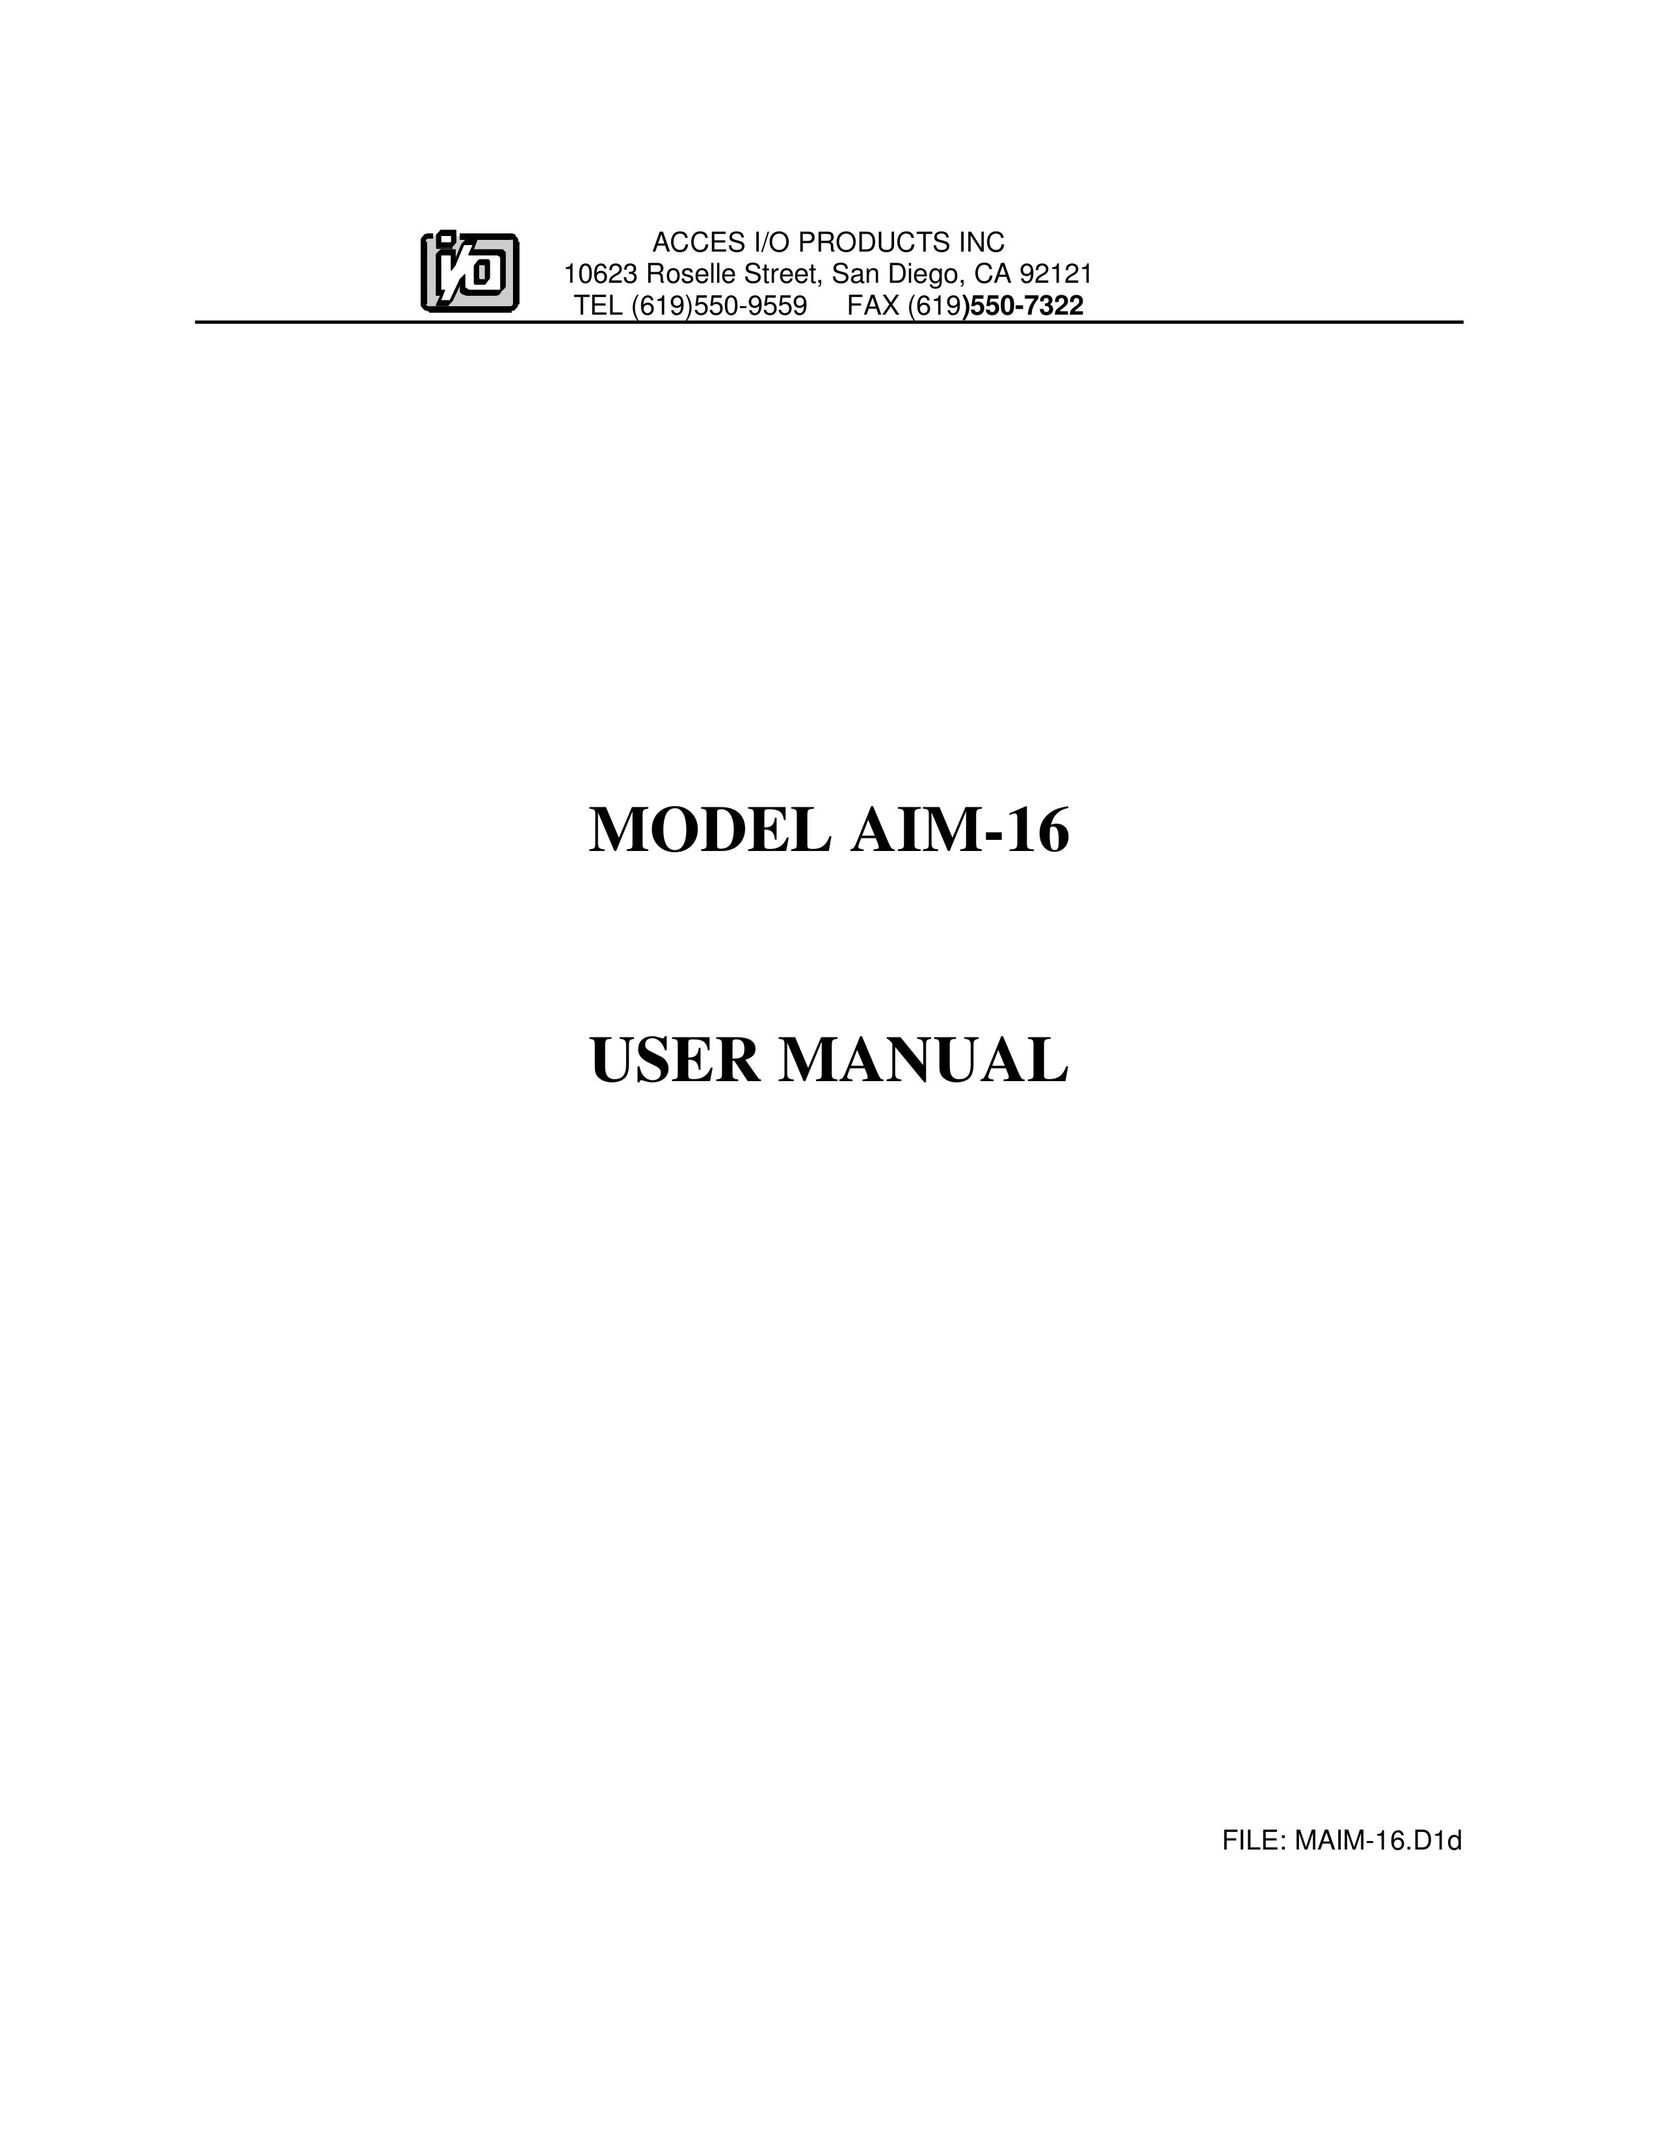 Access AIM-16 Personal Computer User Manual